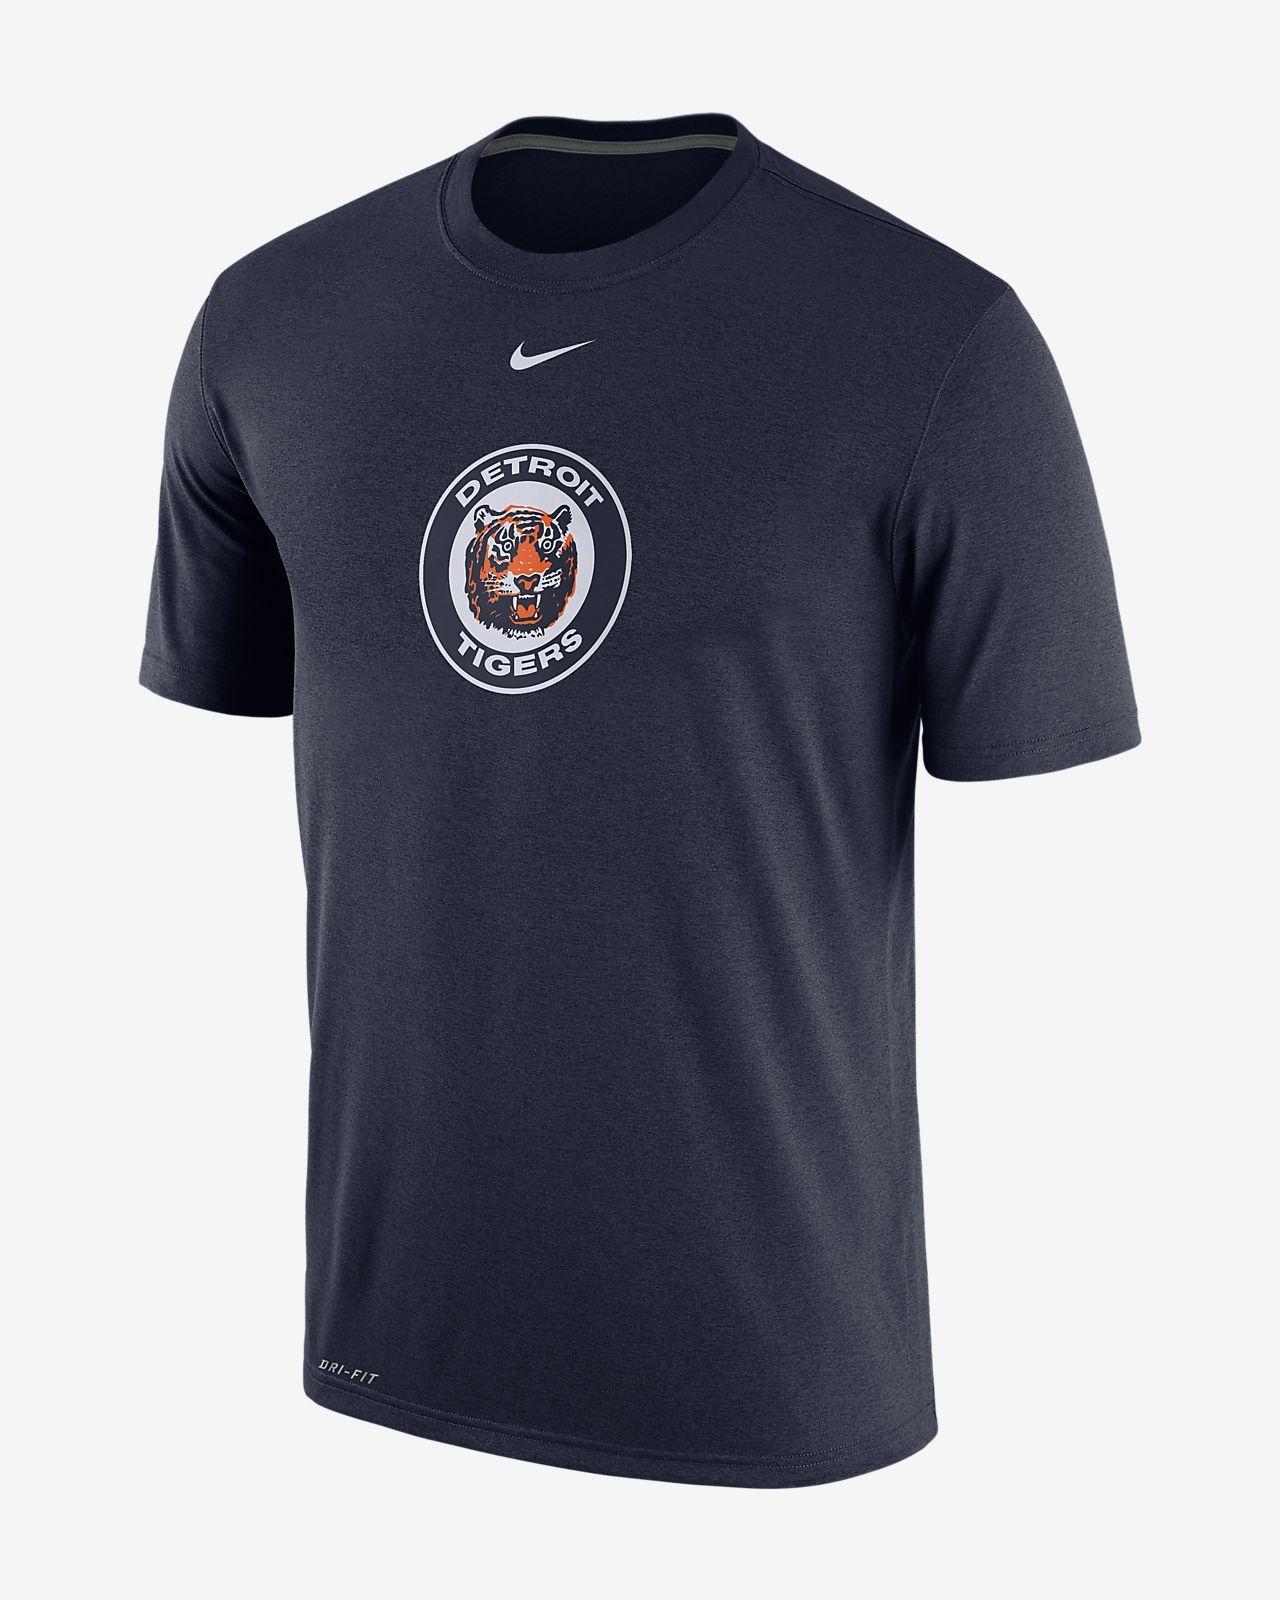 Tiger C Logo - Nike Logo Legend (MLB Tigers) Men's T-Shirt. Nike.com